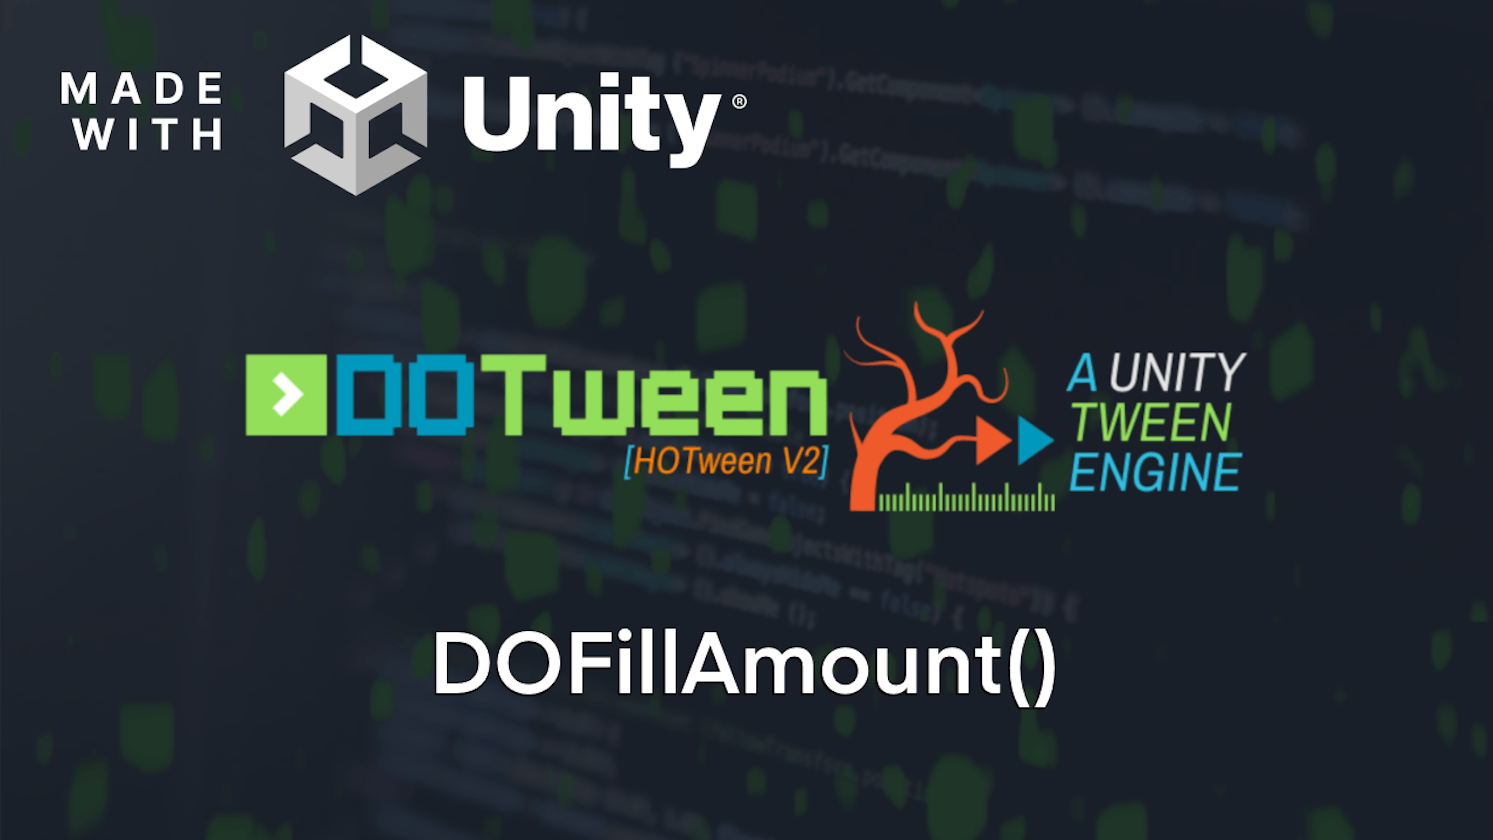 Made With Unity | DOTween: DOFillAmount()